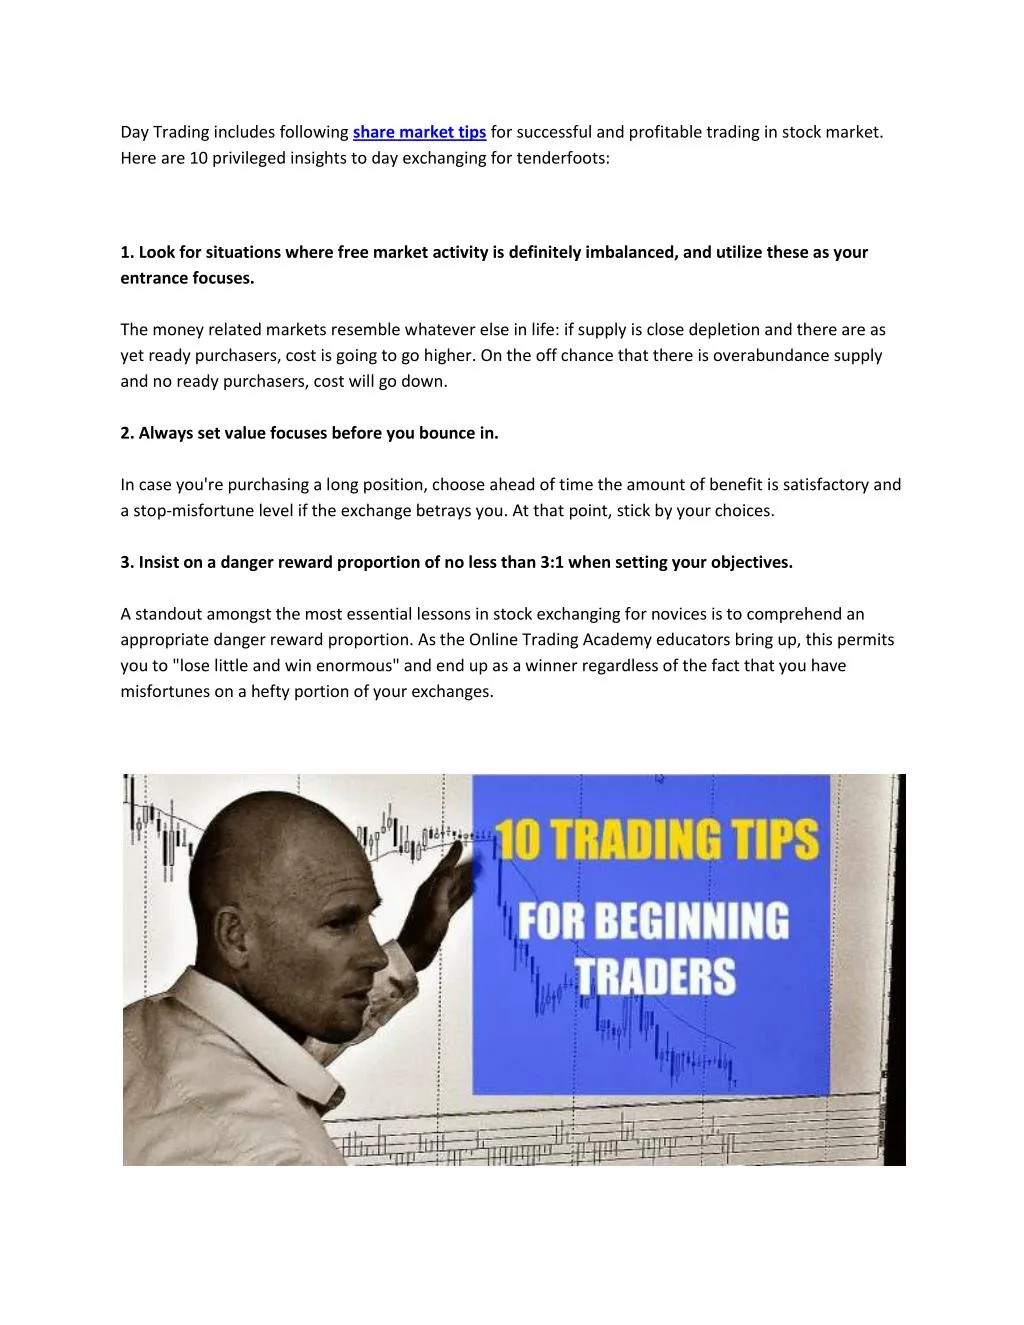 share market trading tips for beginners